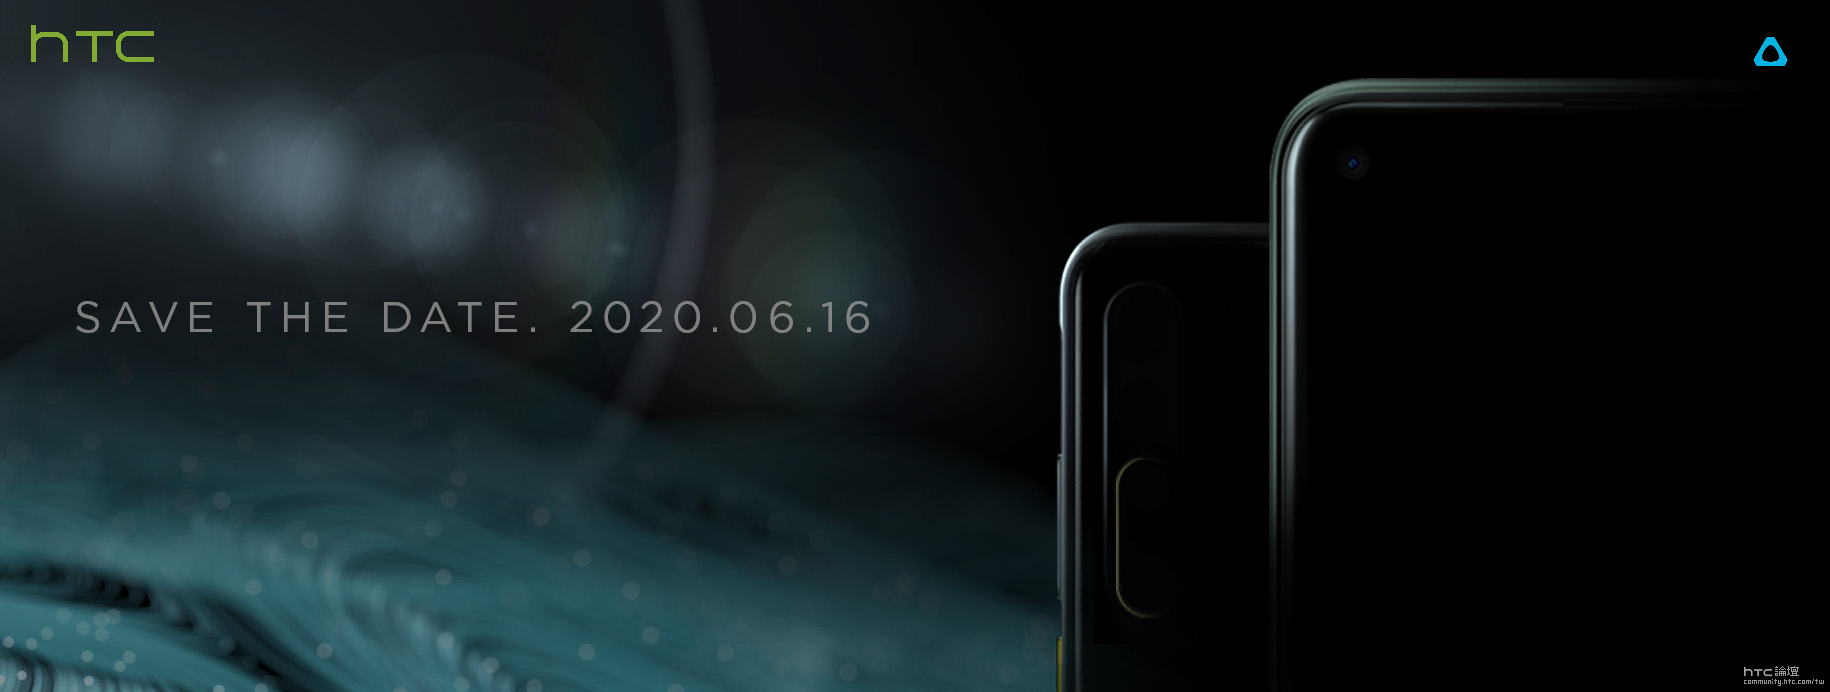 HTC Desire 20 Pro launch poster